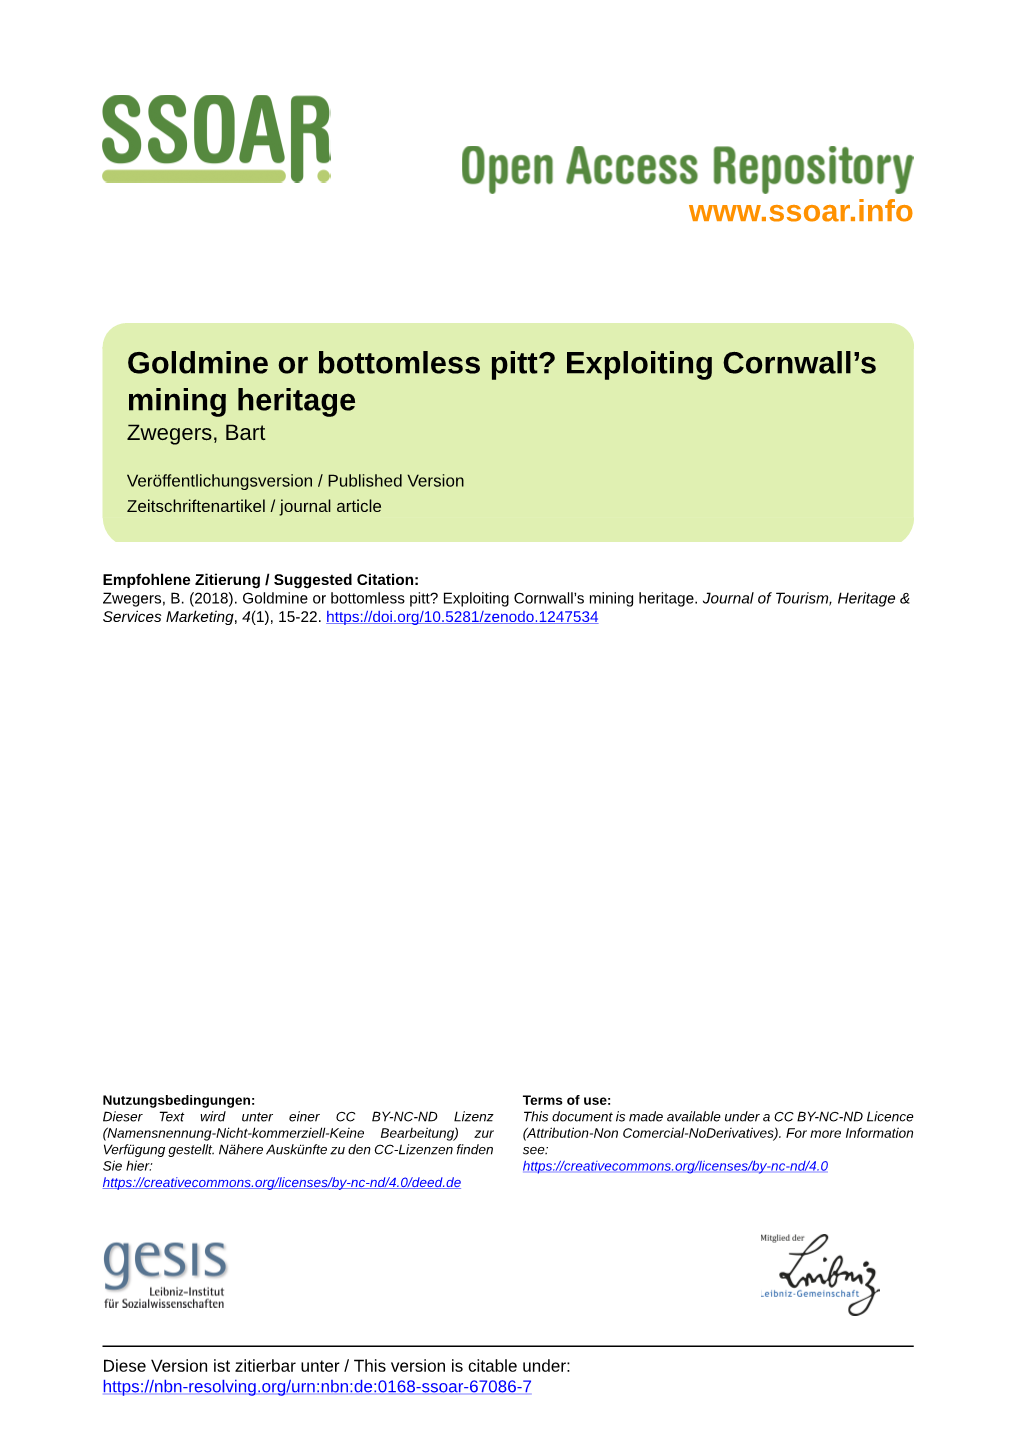 Goldmine Or Bottomless Pitt? Exploiting Cornwall's Mining Heritage